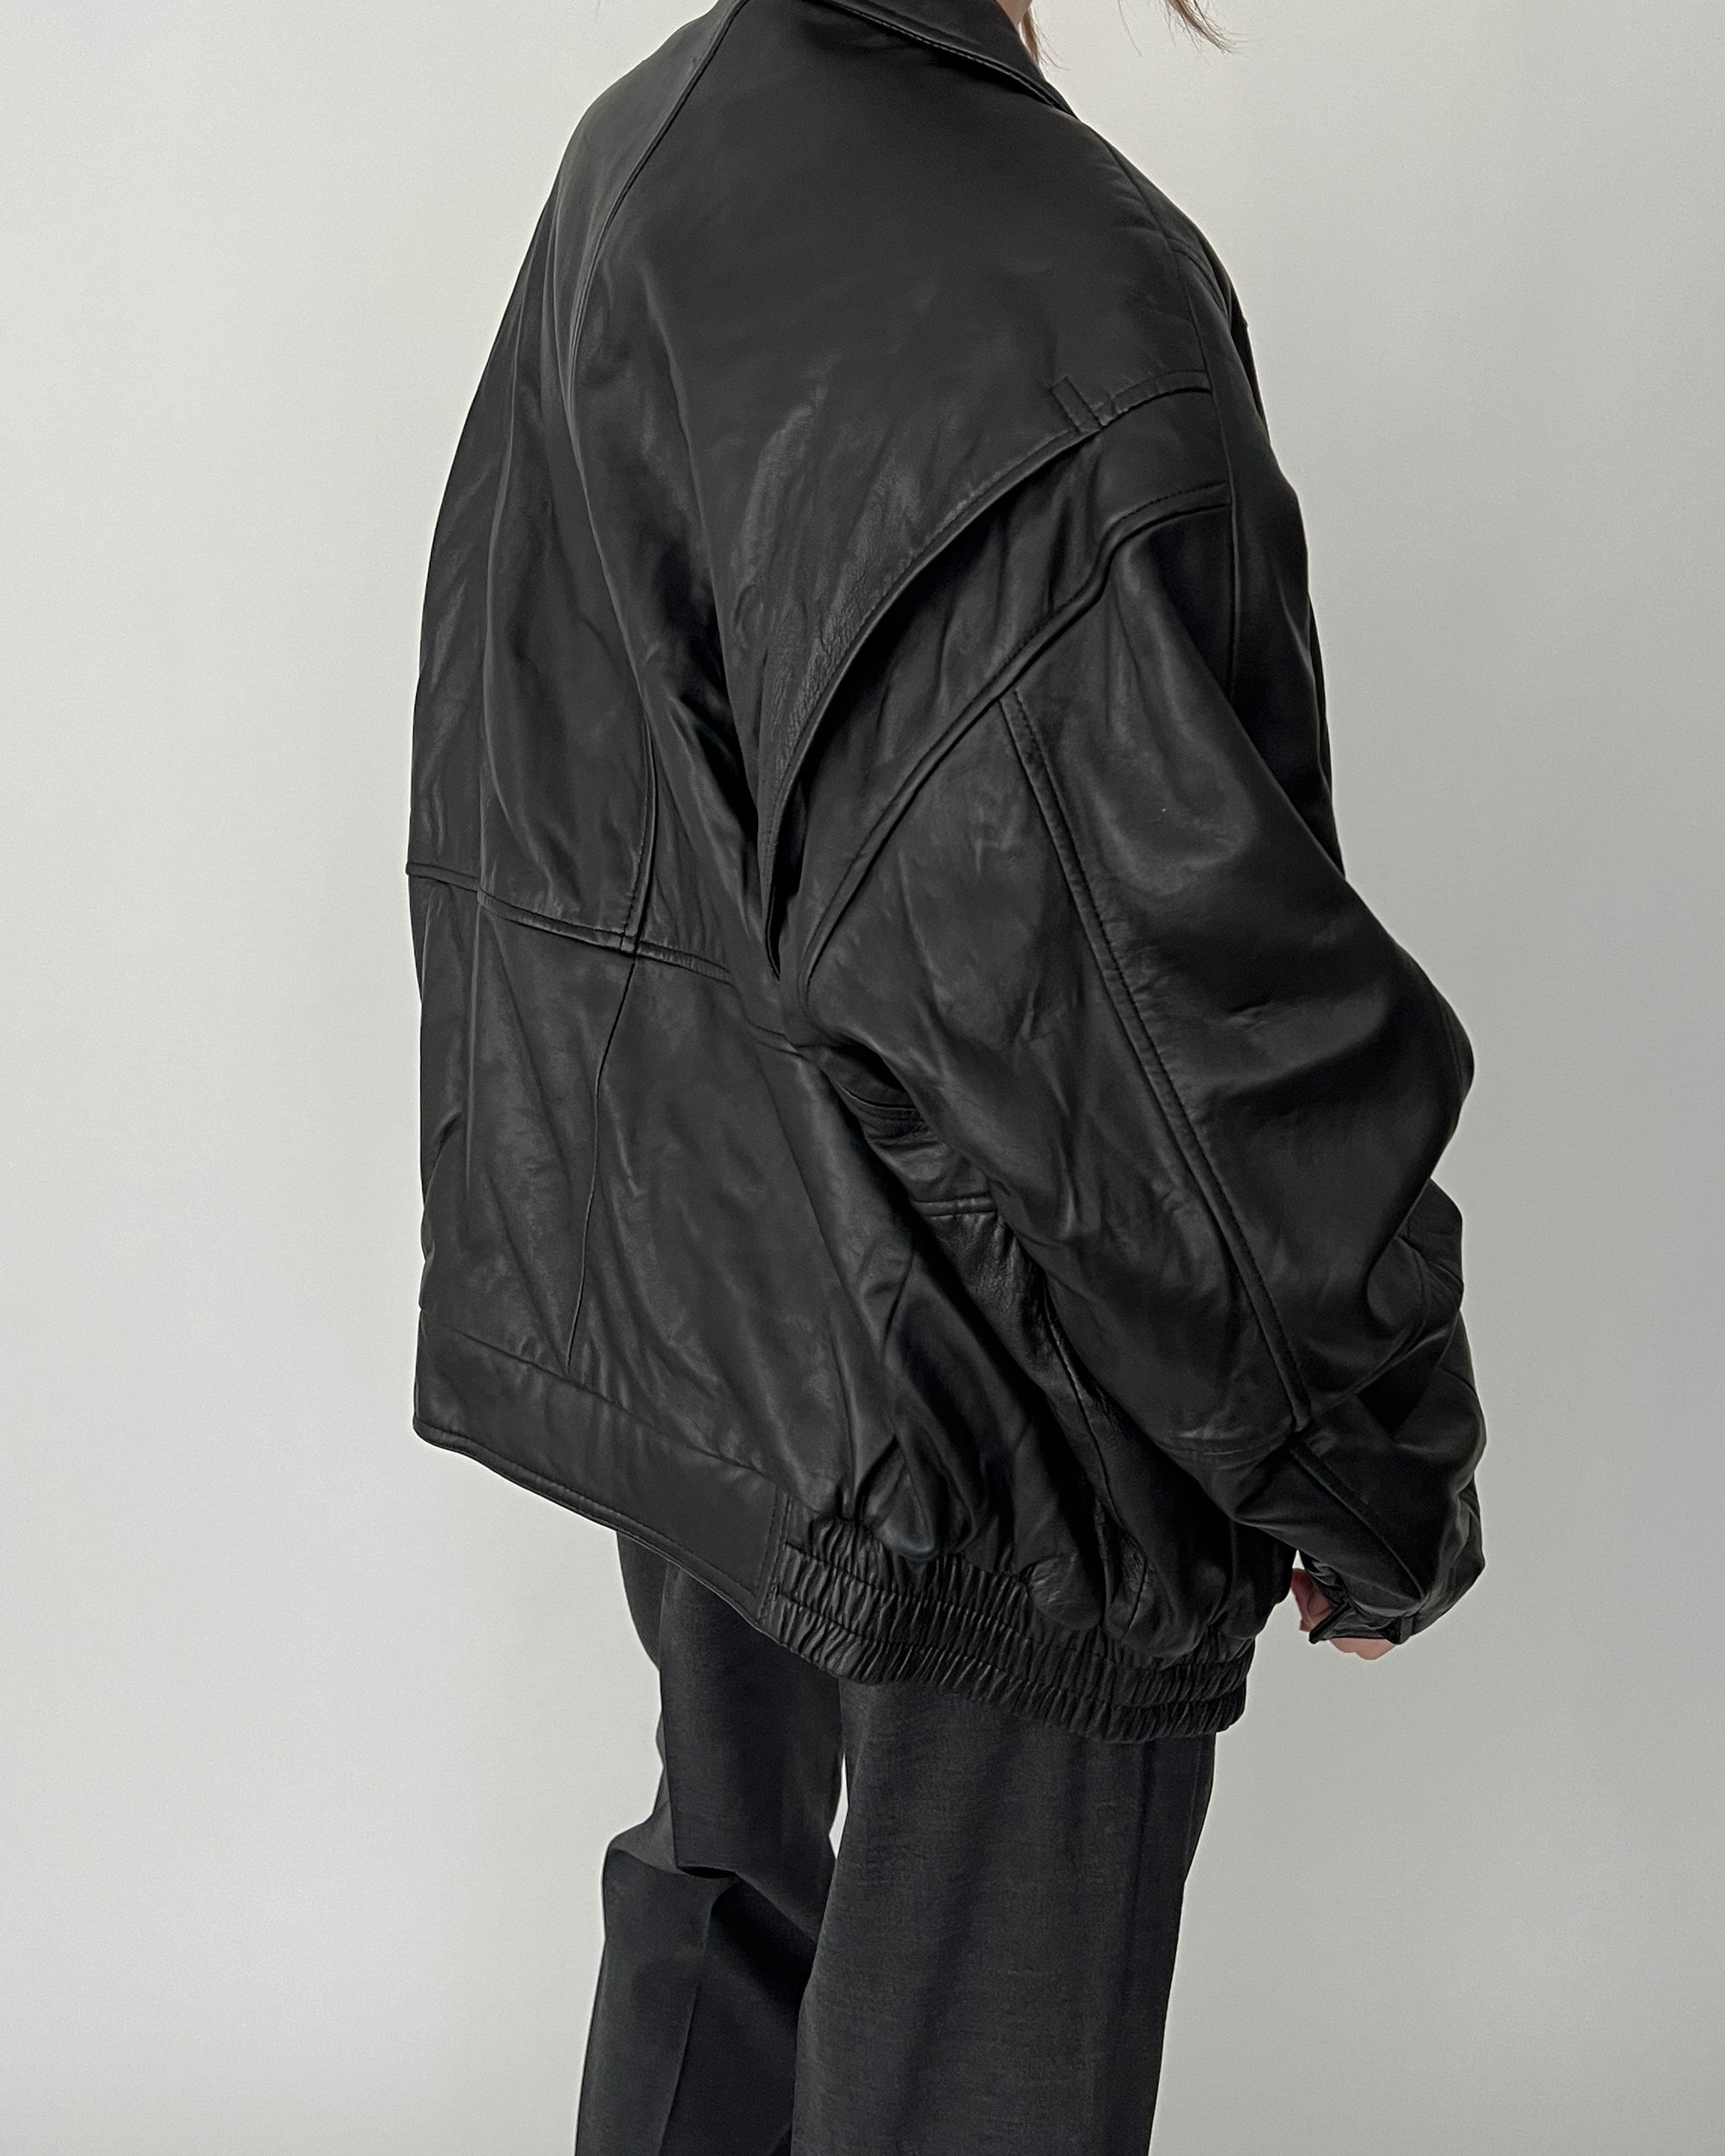 Rare Vintage Black Leather Bomber Jacket